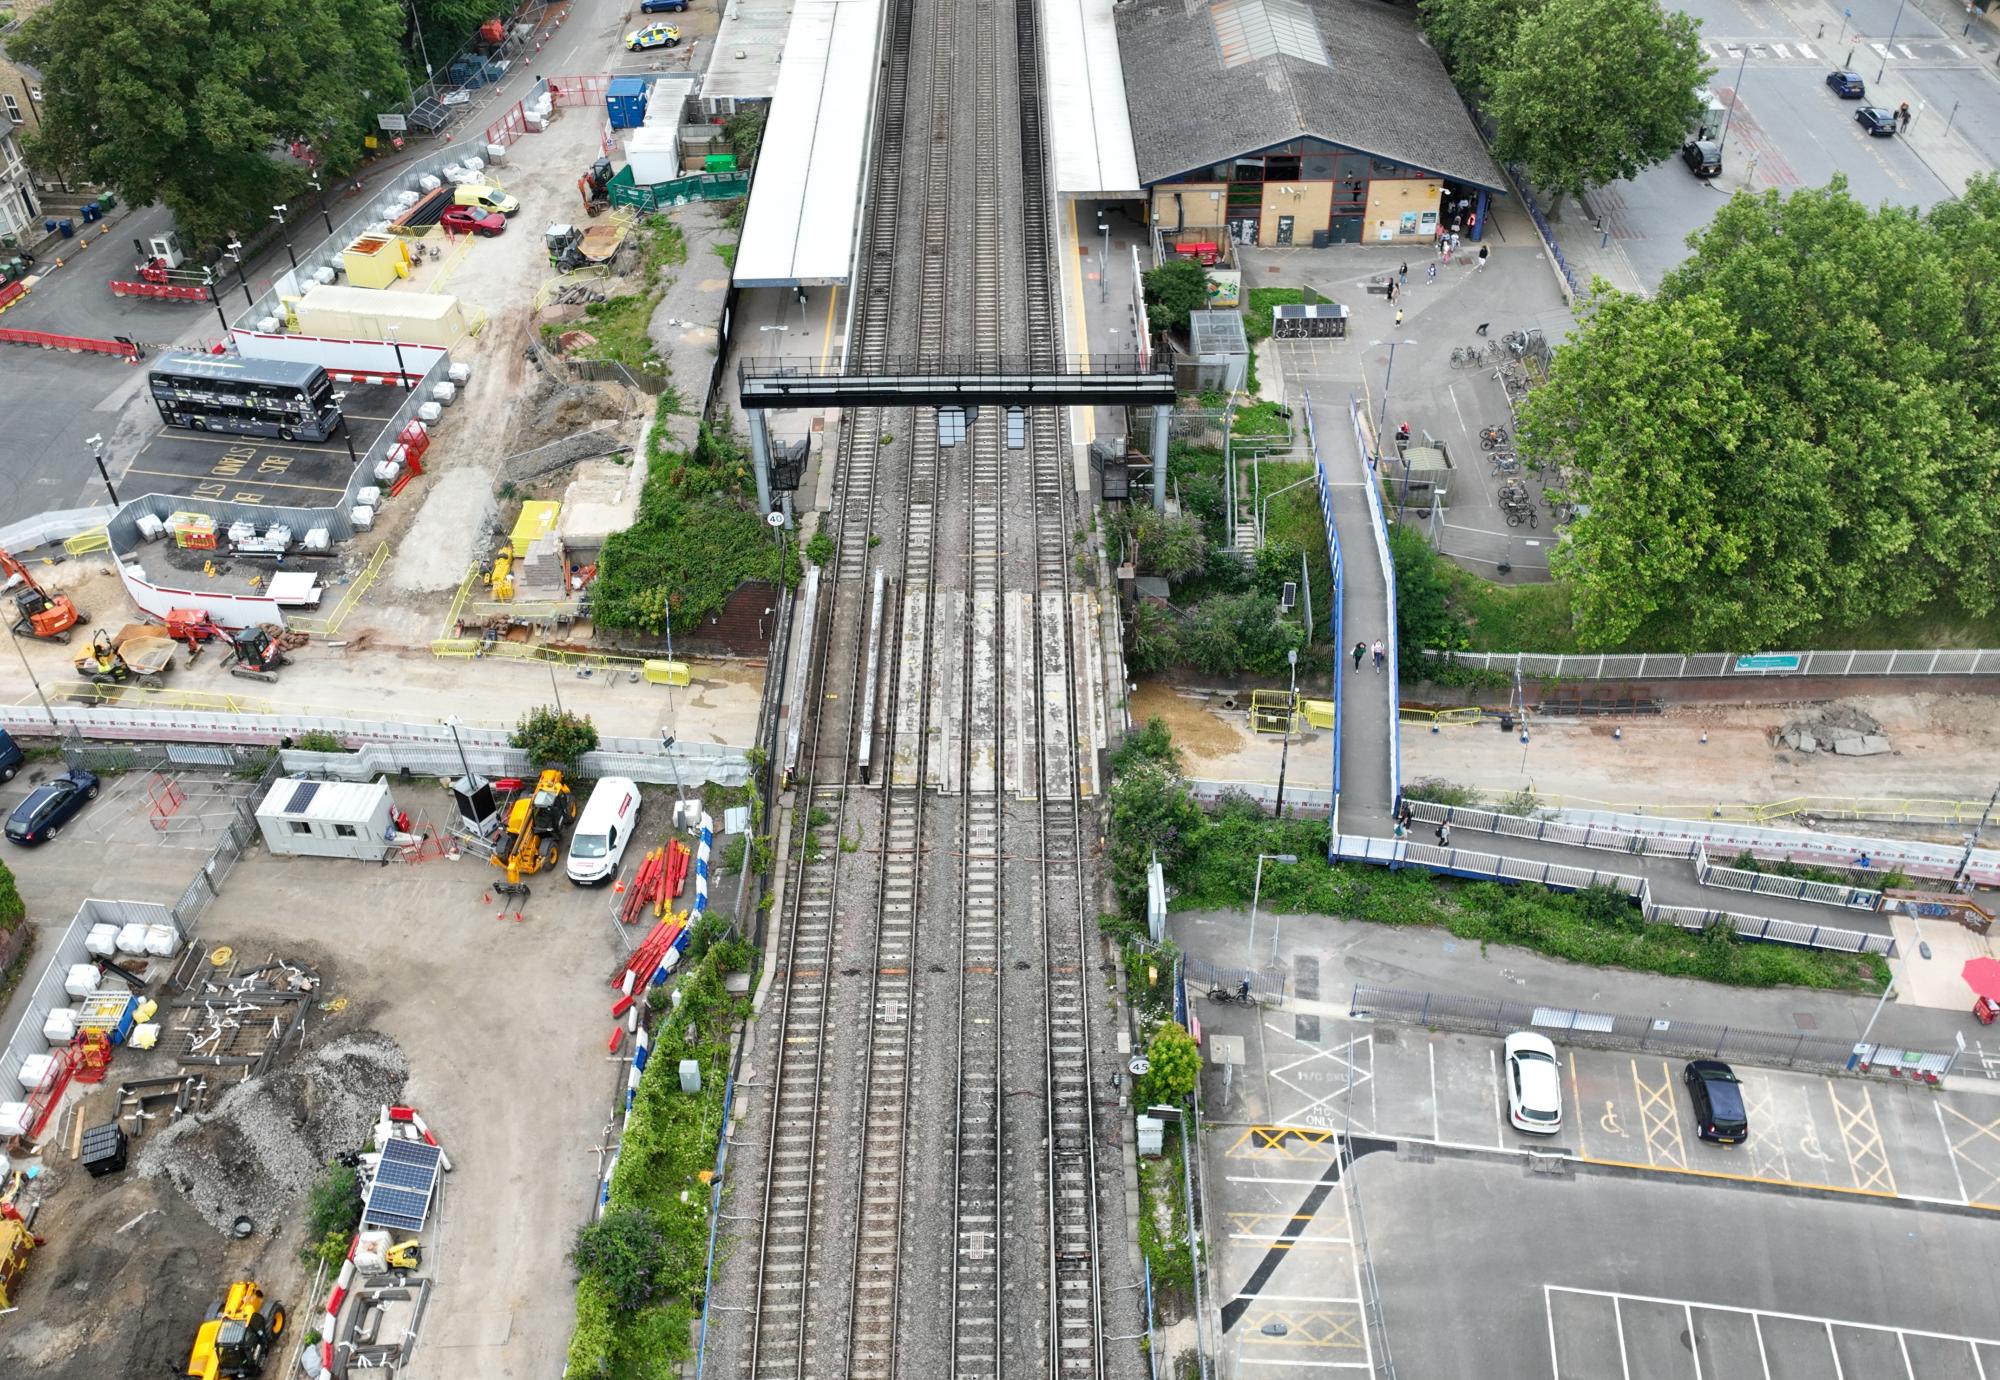 Botley Road bridge depicting rail infrastructure upgrades